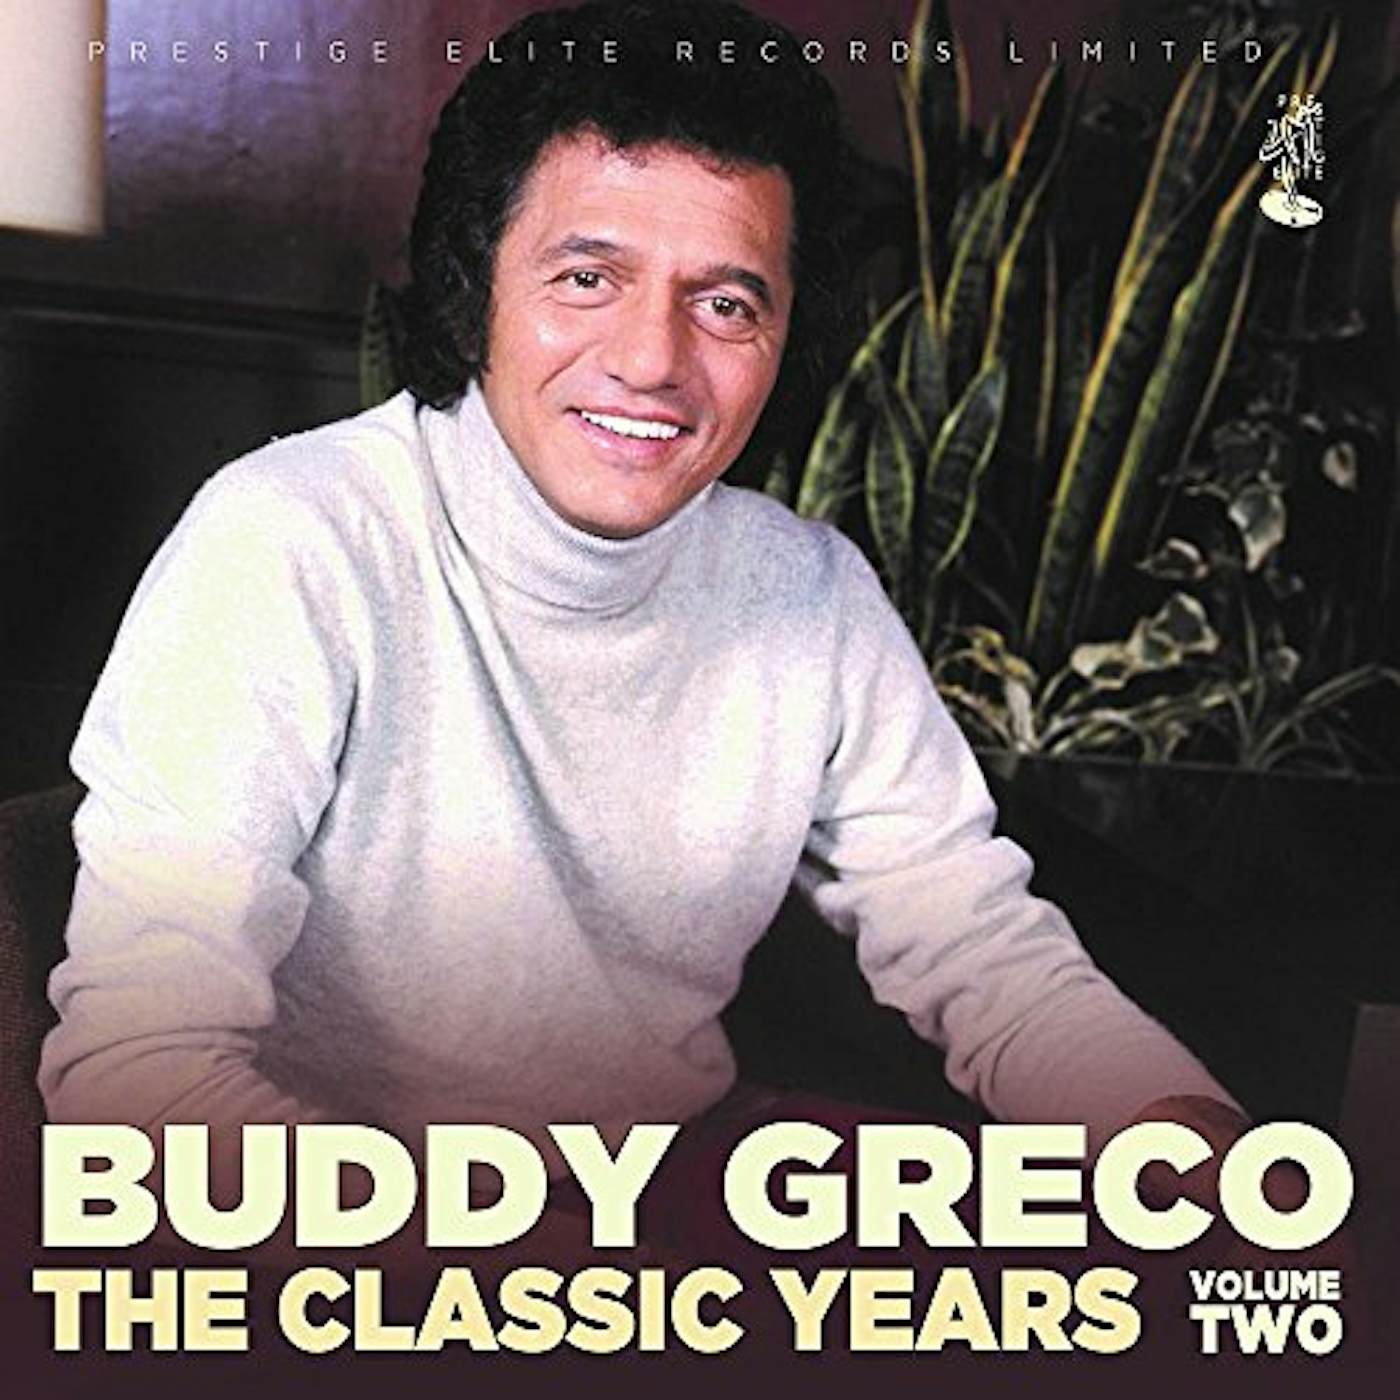 Buddy Greco CLASSIC YEARS VOL 2 CD